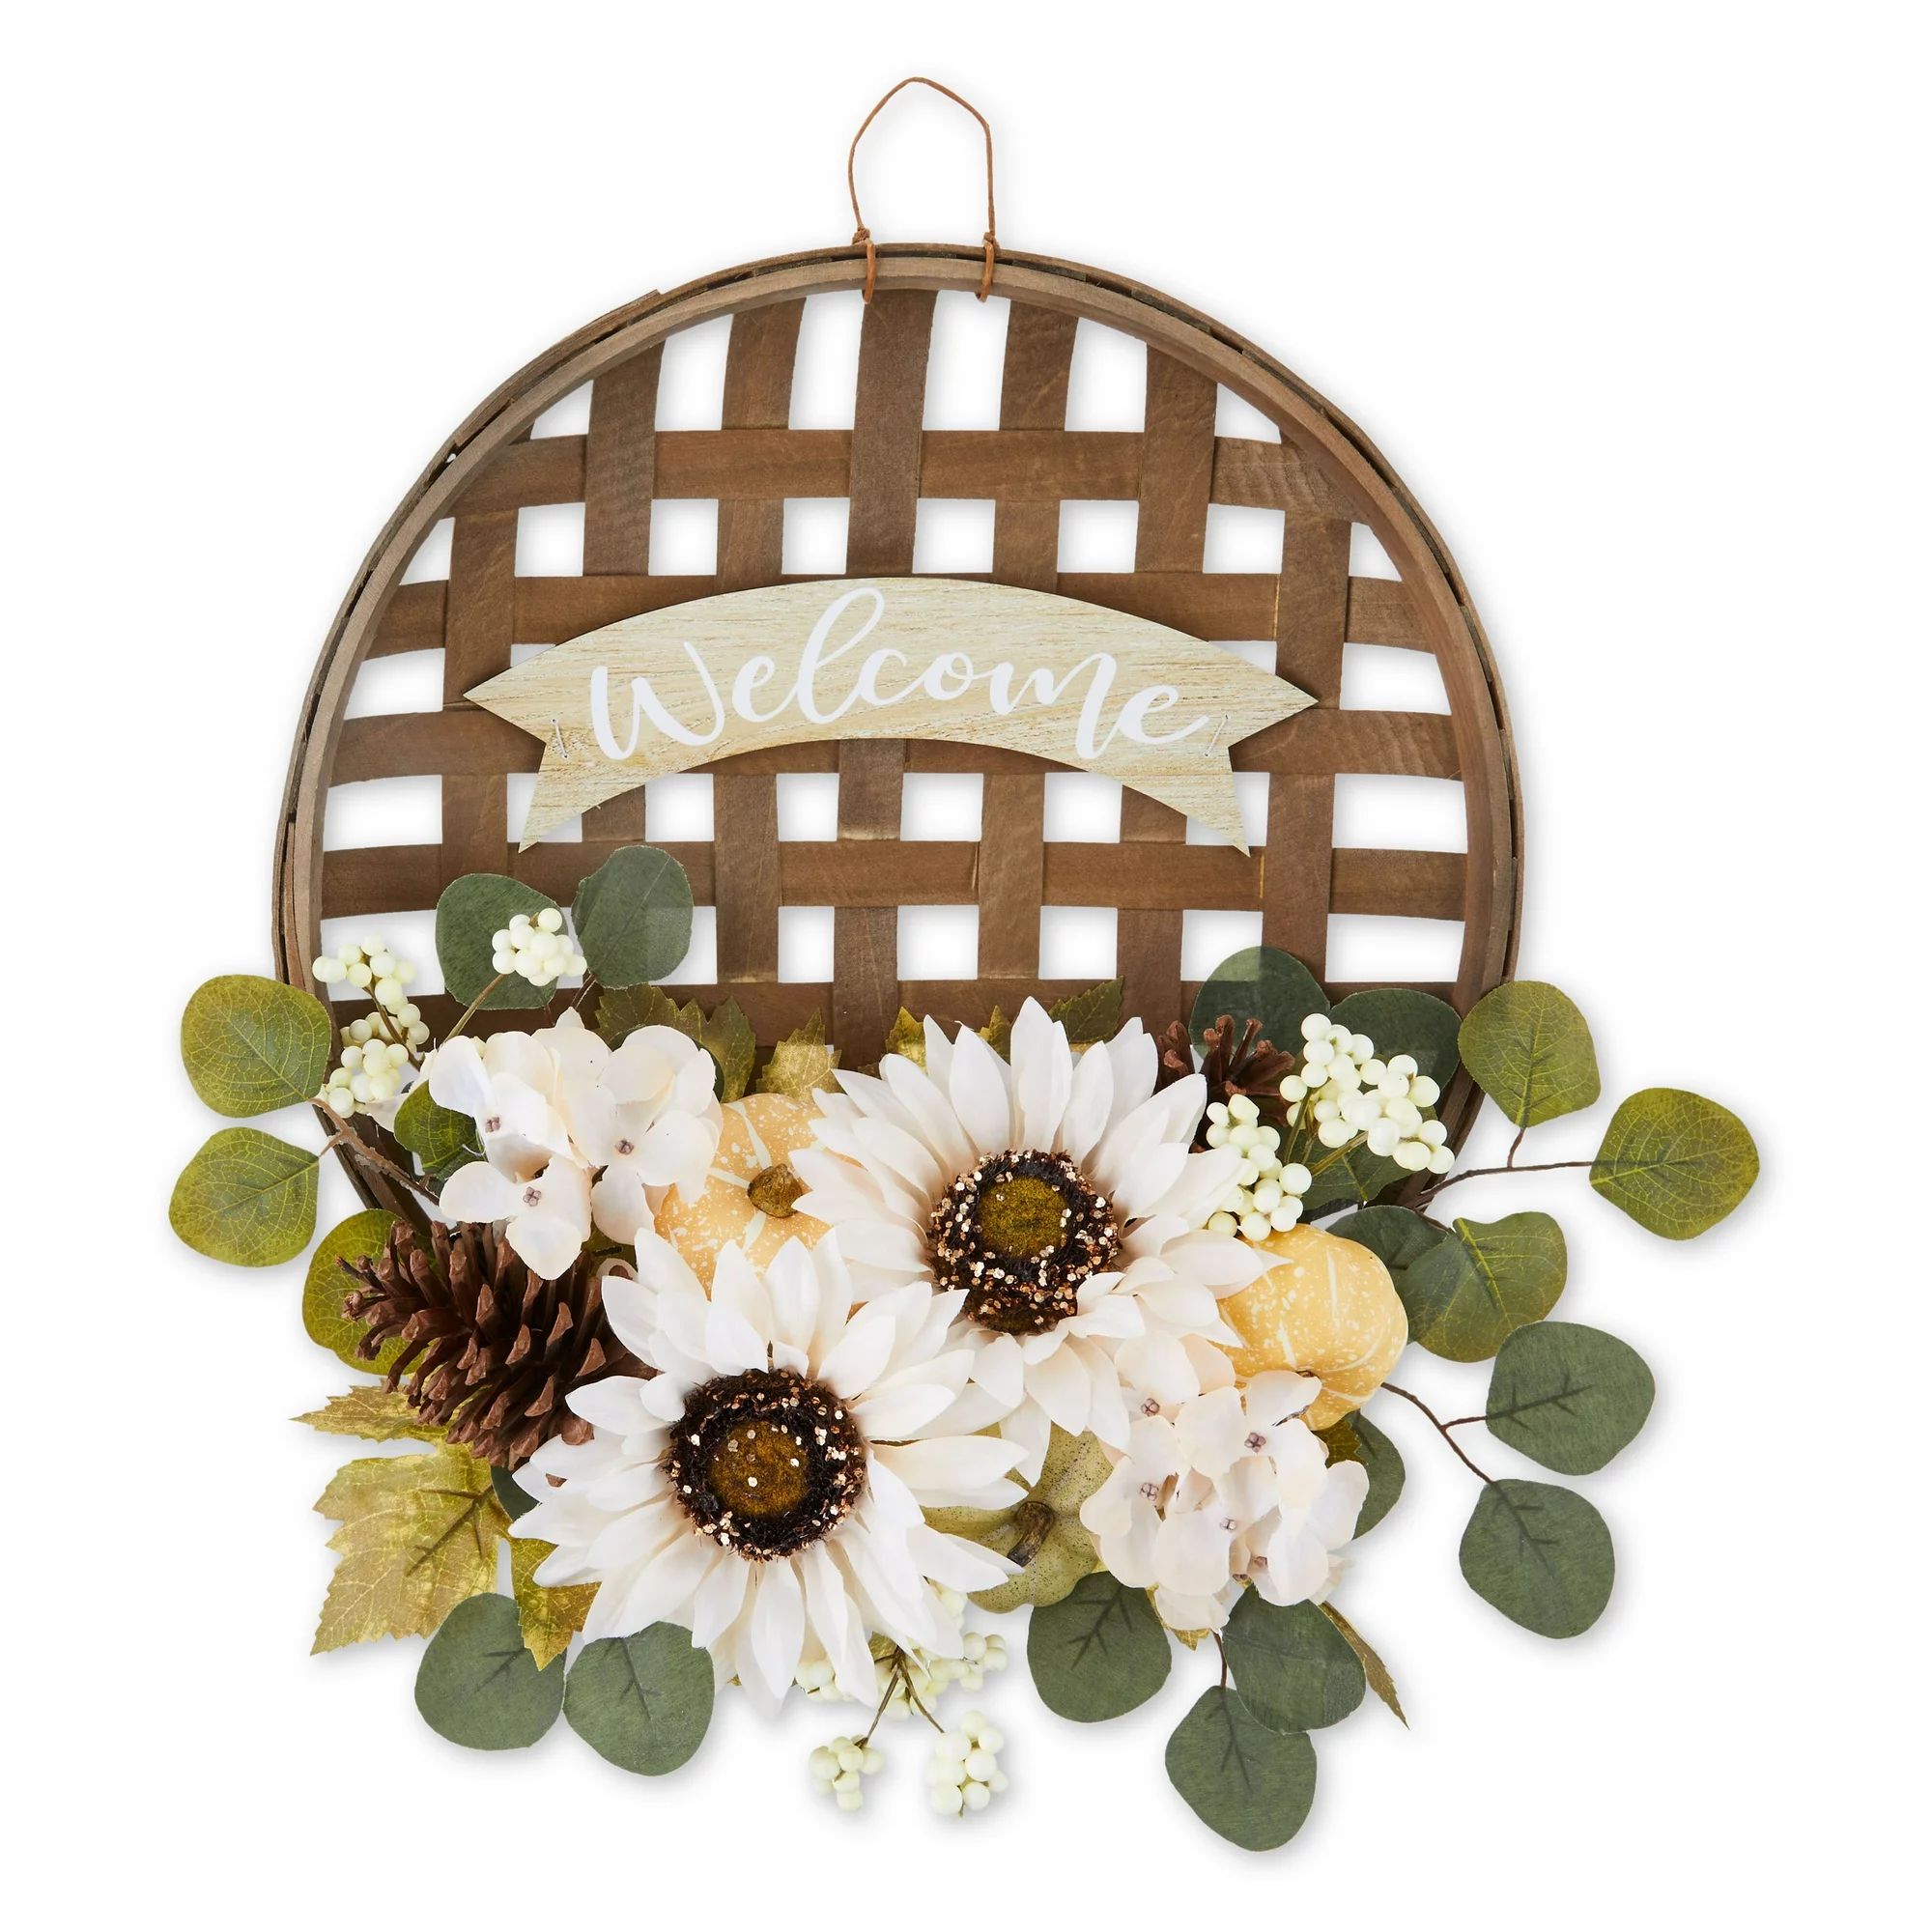 Harvest Welcome Basket Wreath, by Way To Celebrate | Walmart (US)